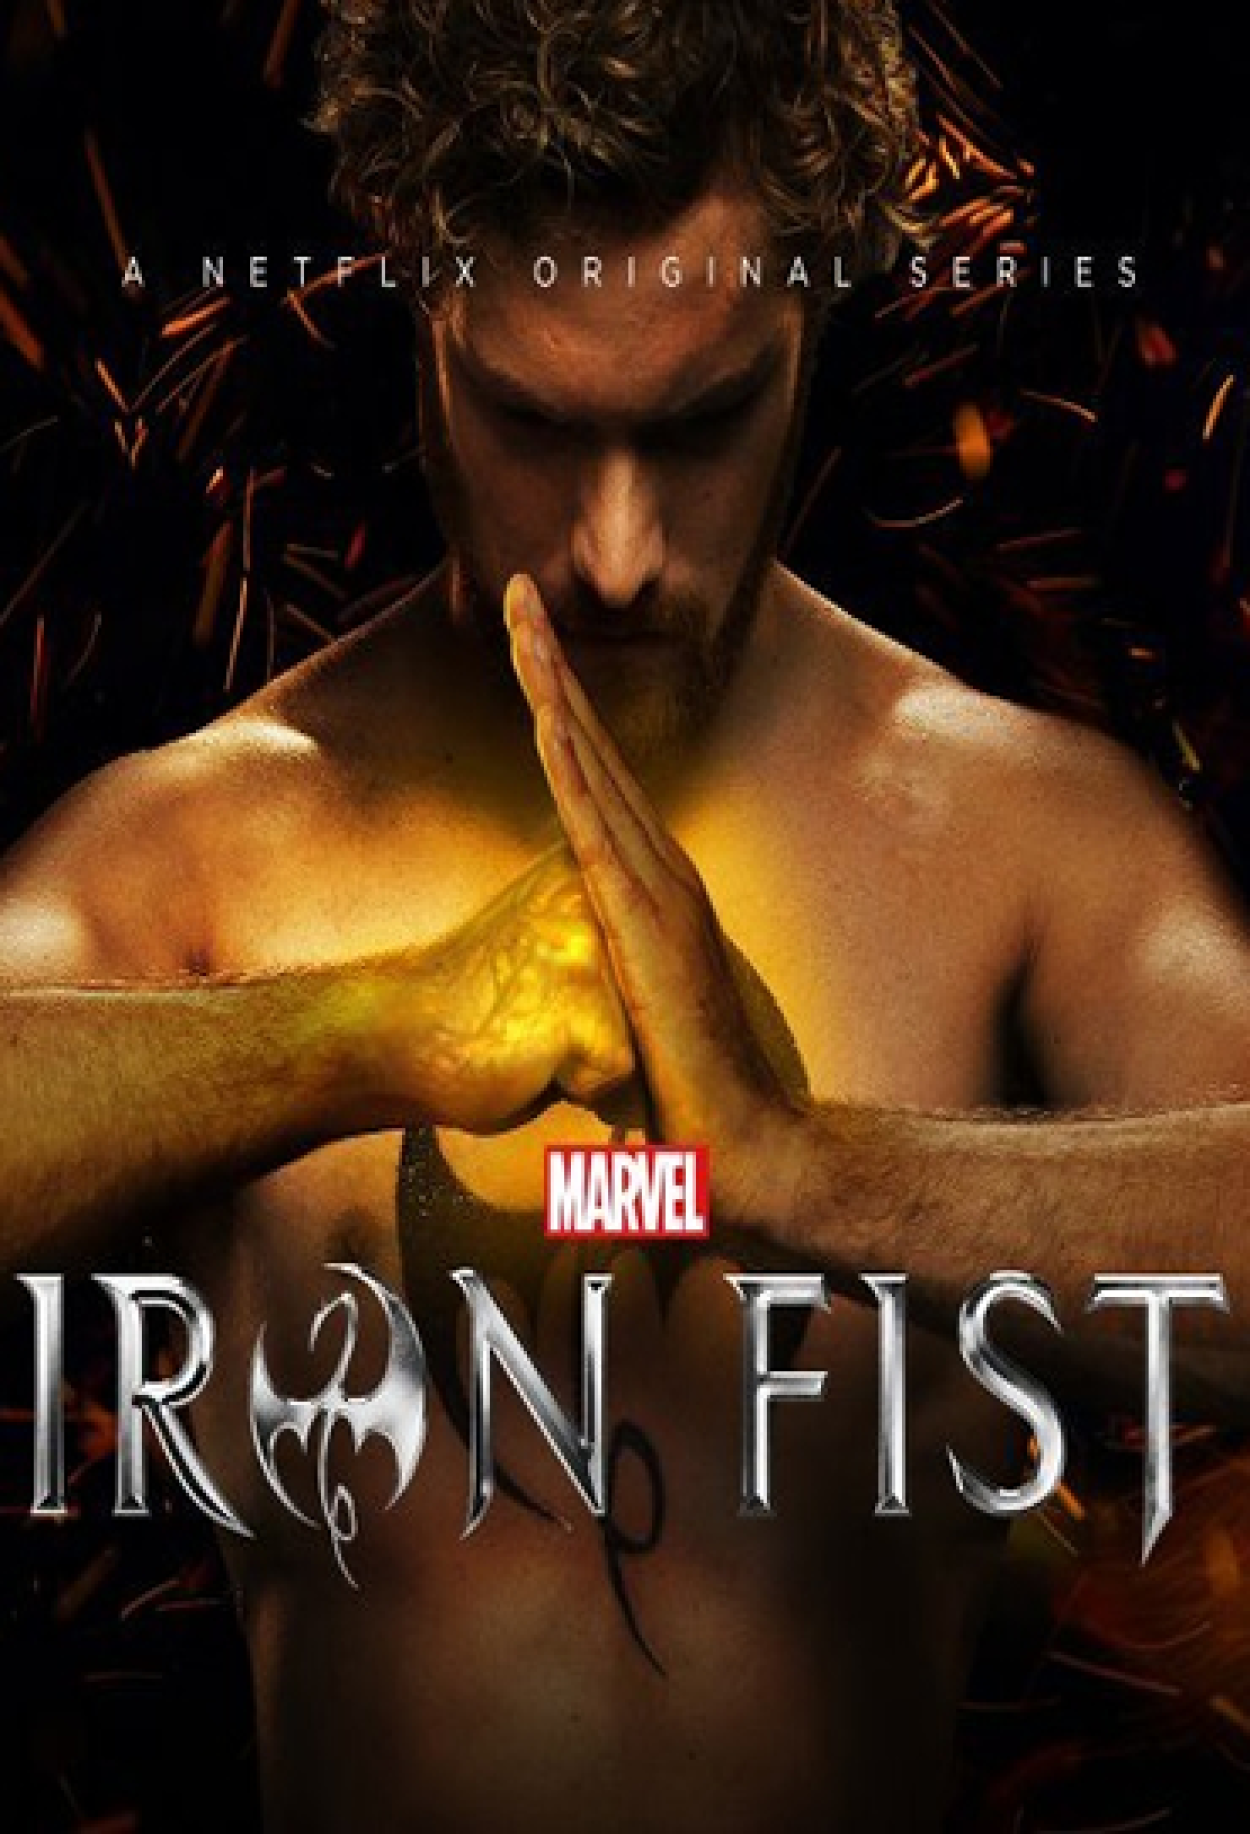 Série Iron Fist cancelada